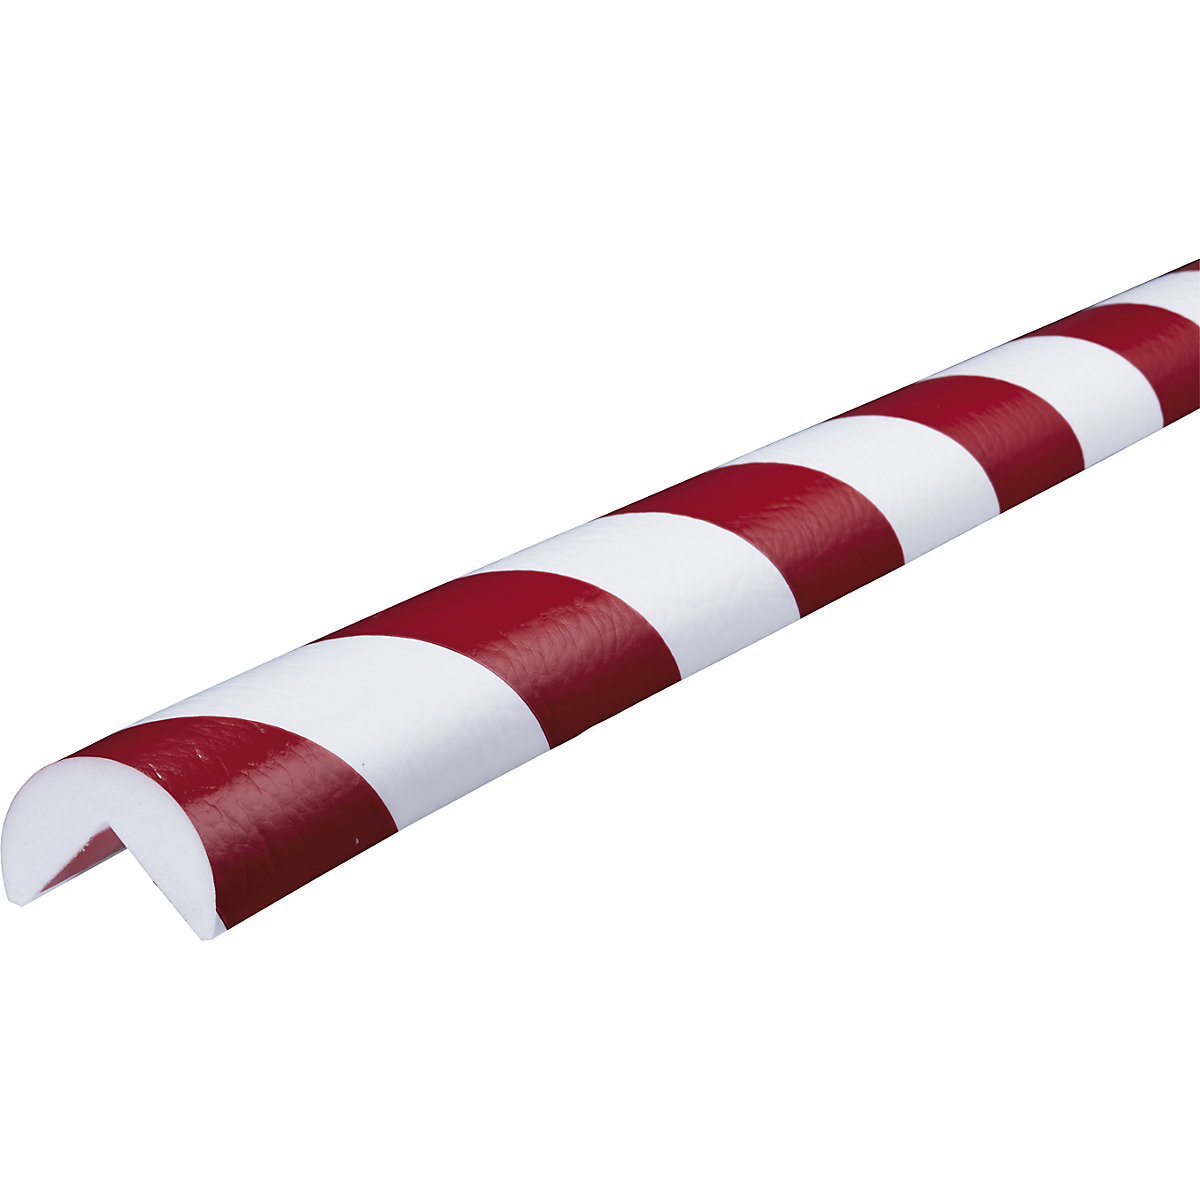 Knuffi®-hoekbescherming – SHG, type A, 1 rol à 5 m, rood/wit-14